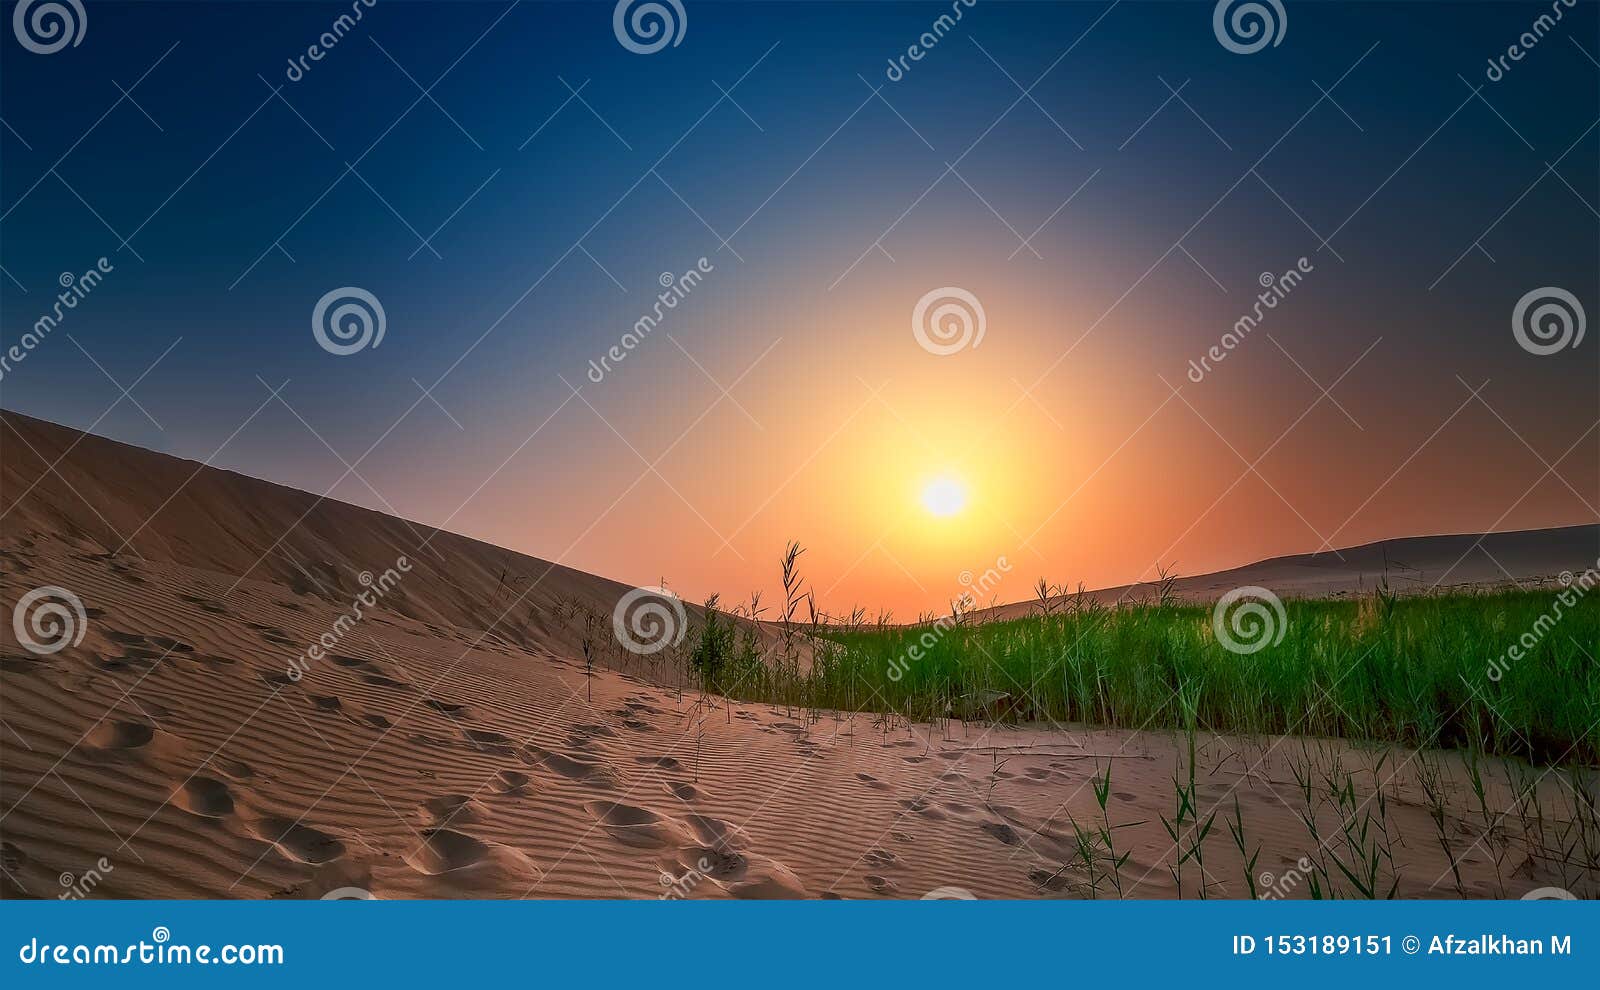 beautiful sunrise in dammam saudi arabia desert